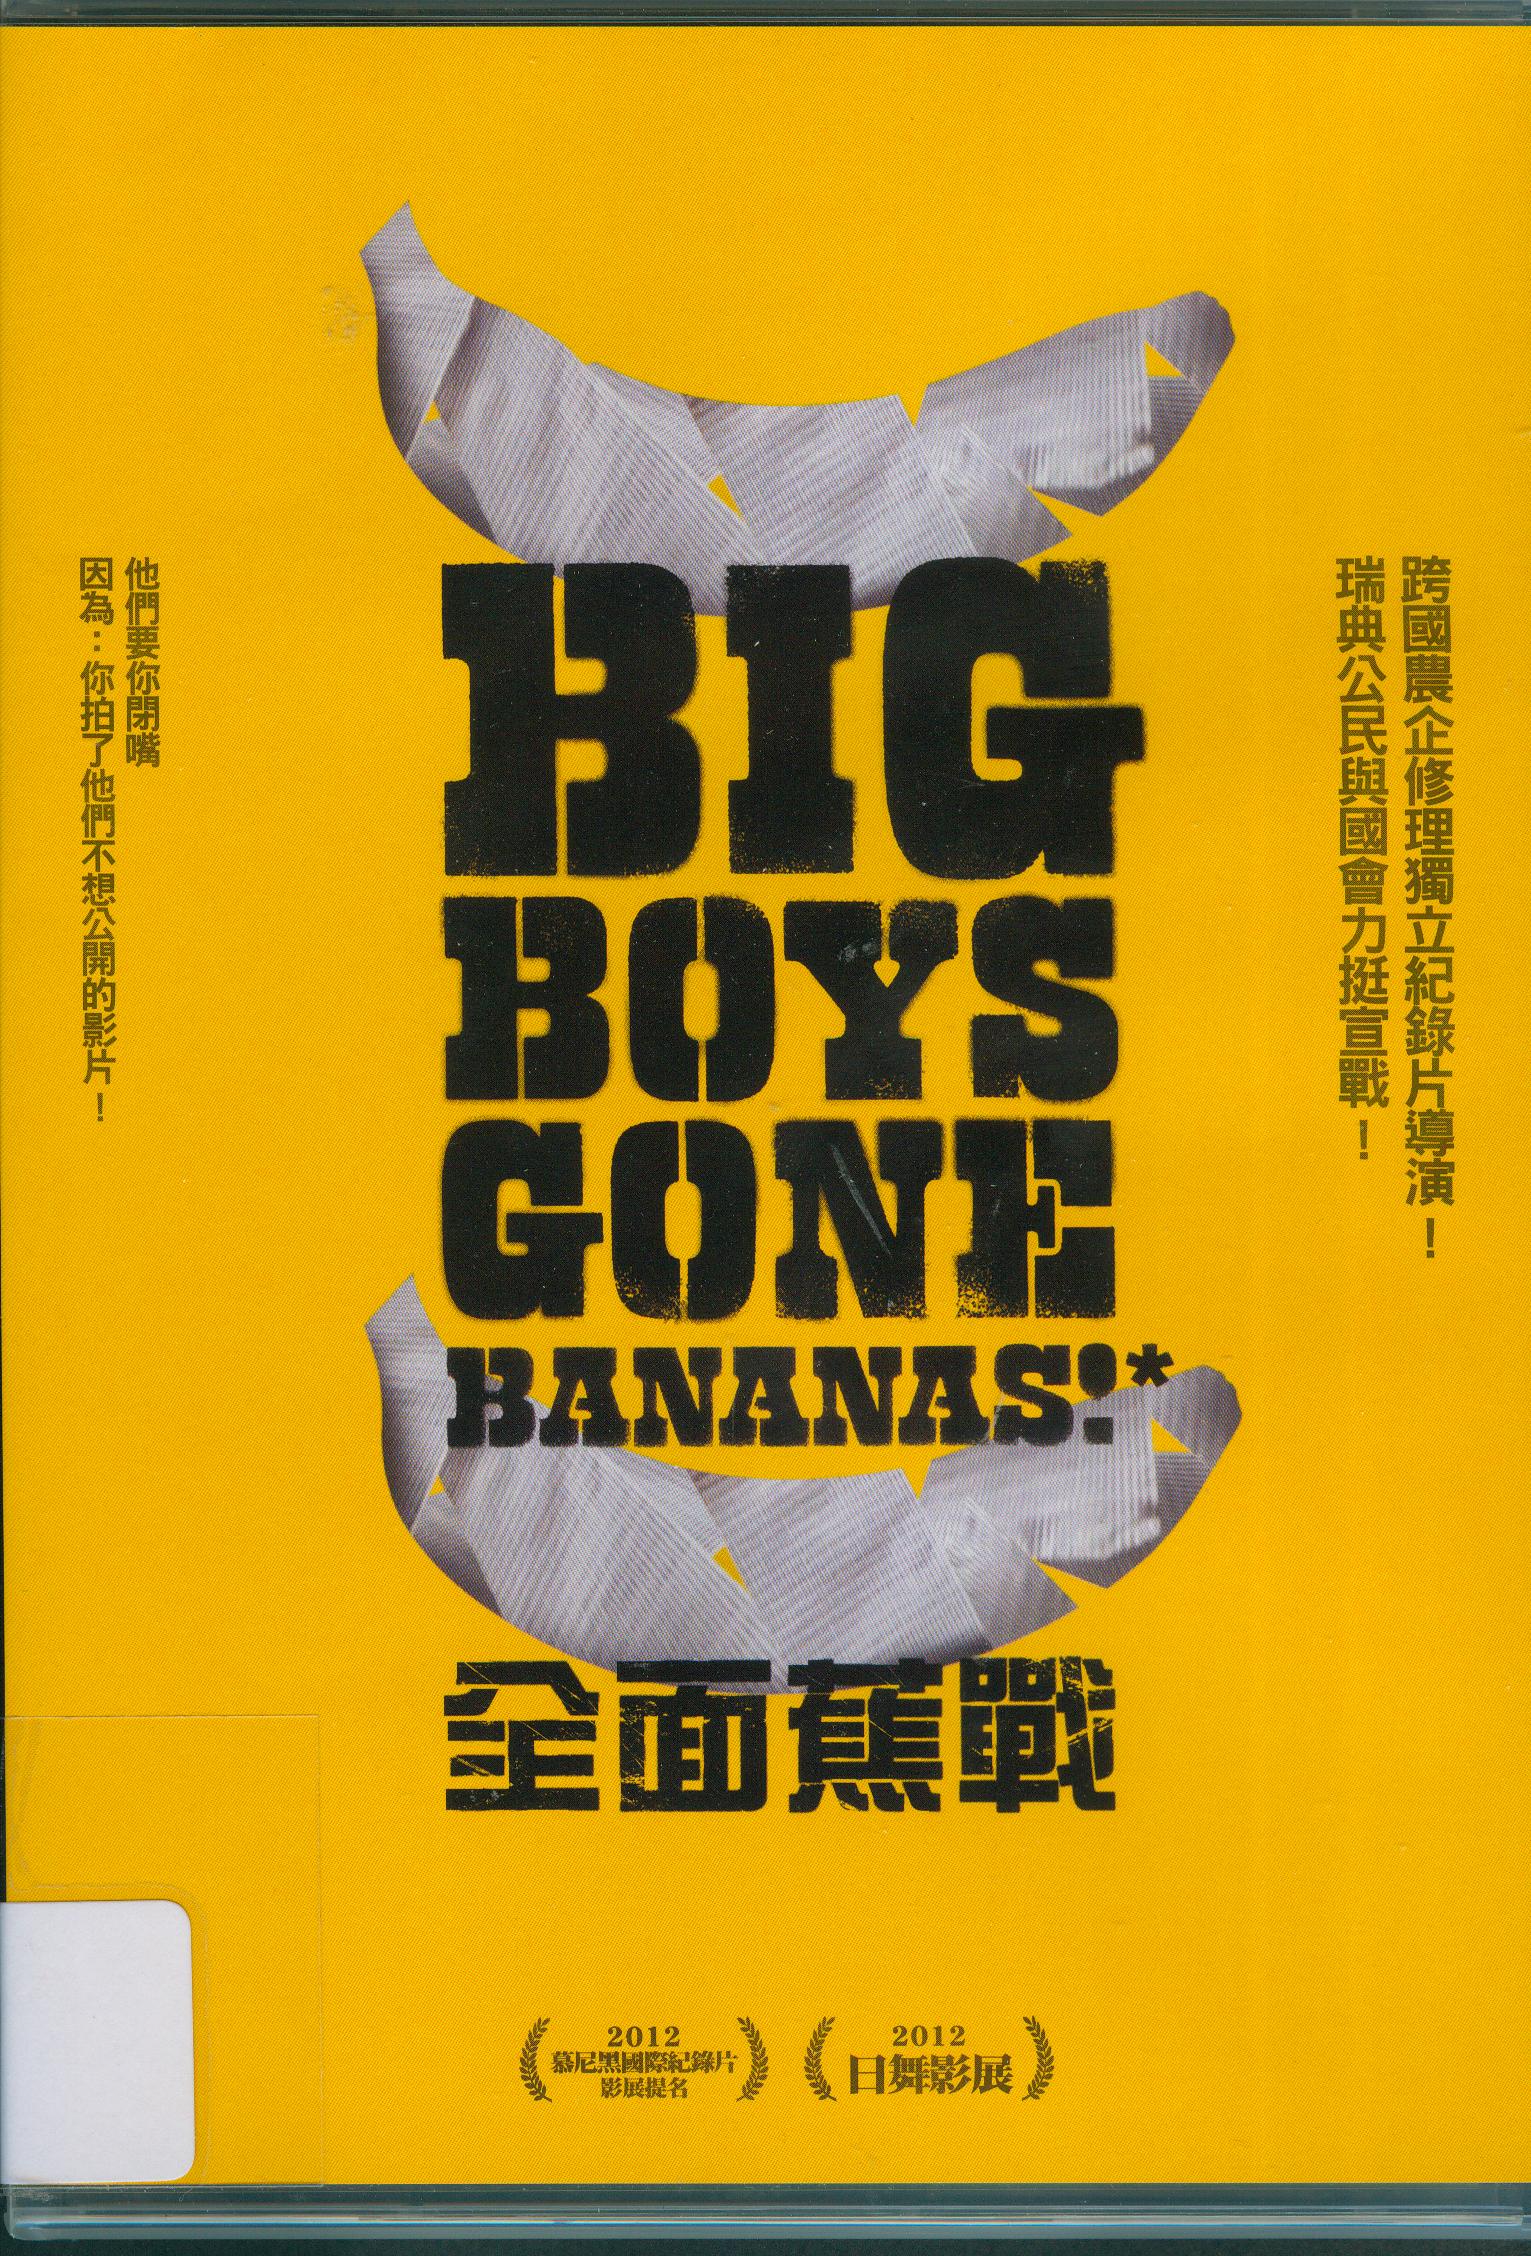 全面蕉戰[普遍級:紀錄片] : Big boys gone bananas!*